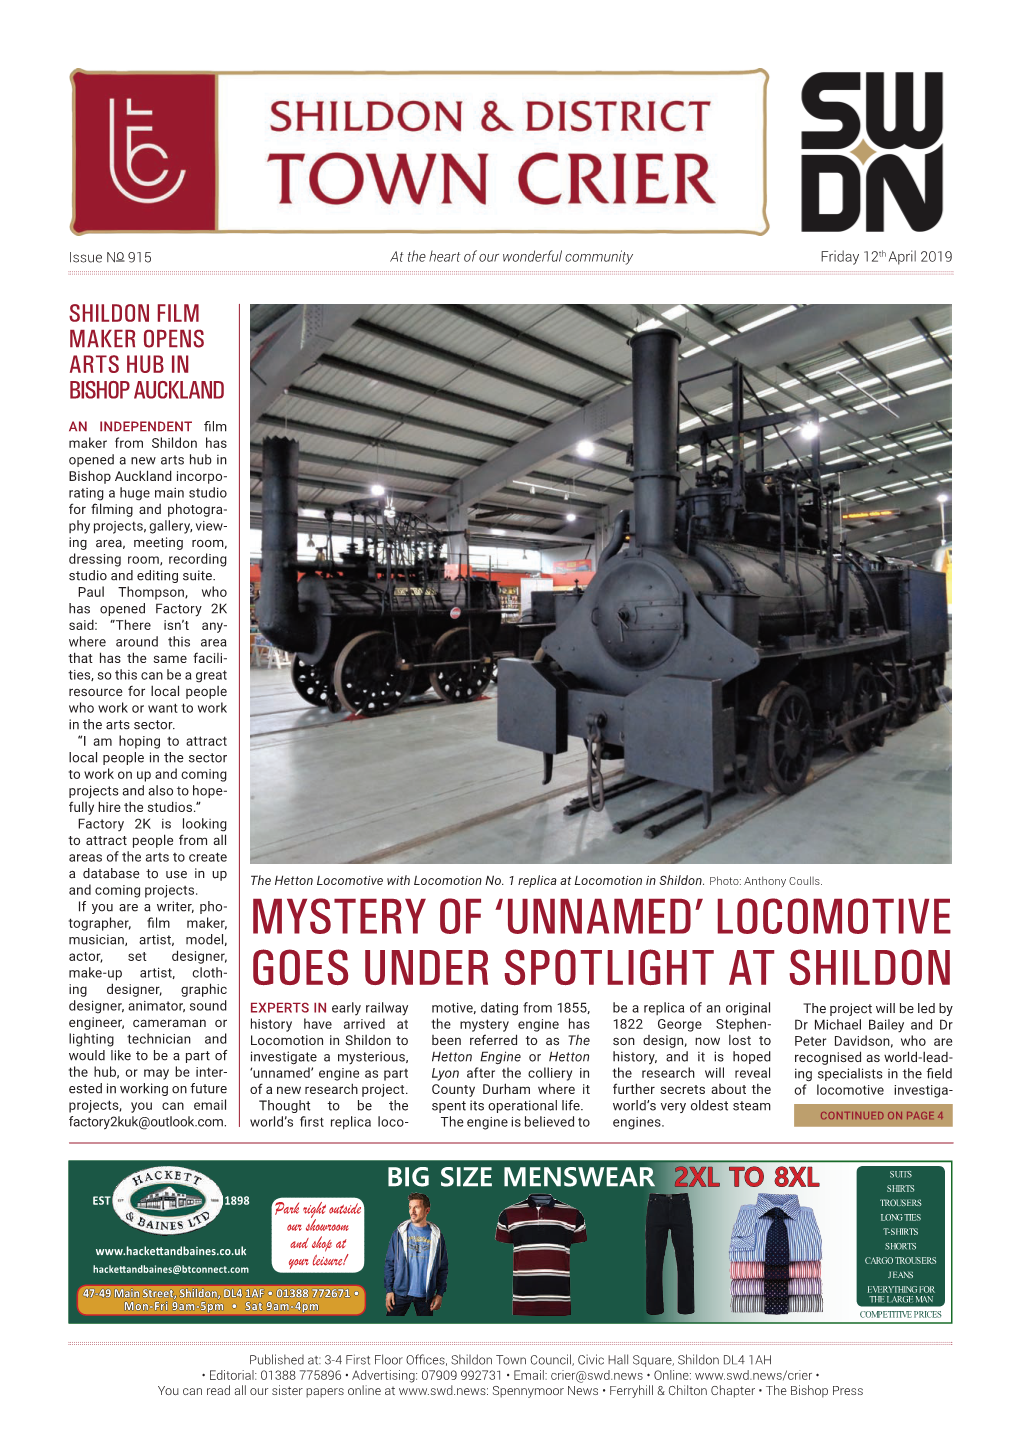 Locomotive Goes Under Spotlight at Shildon